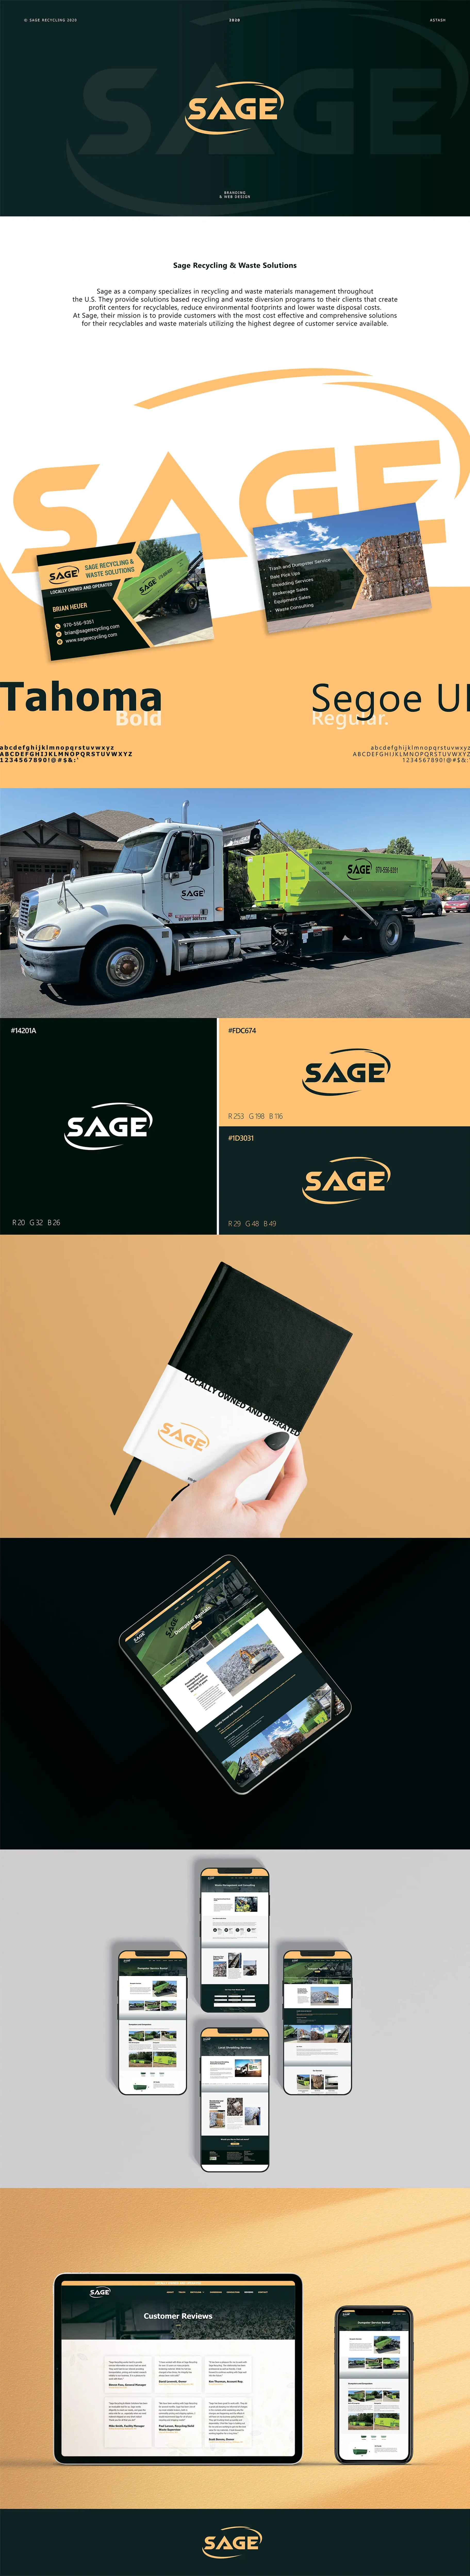 sage_recycling-web